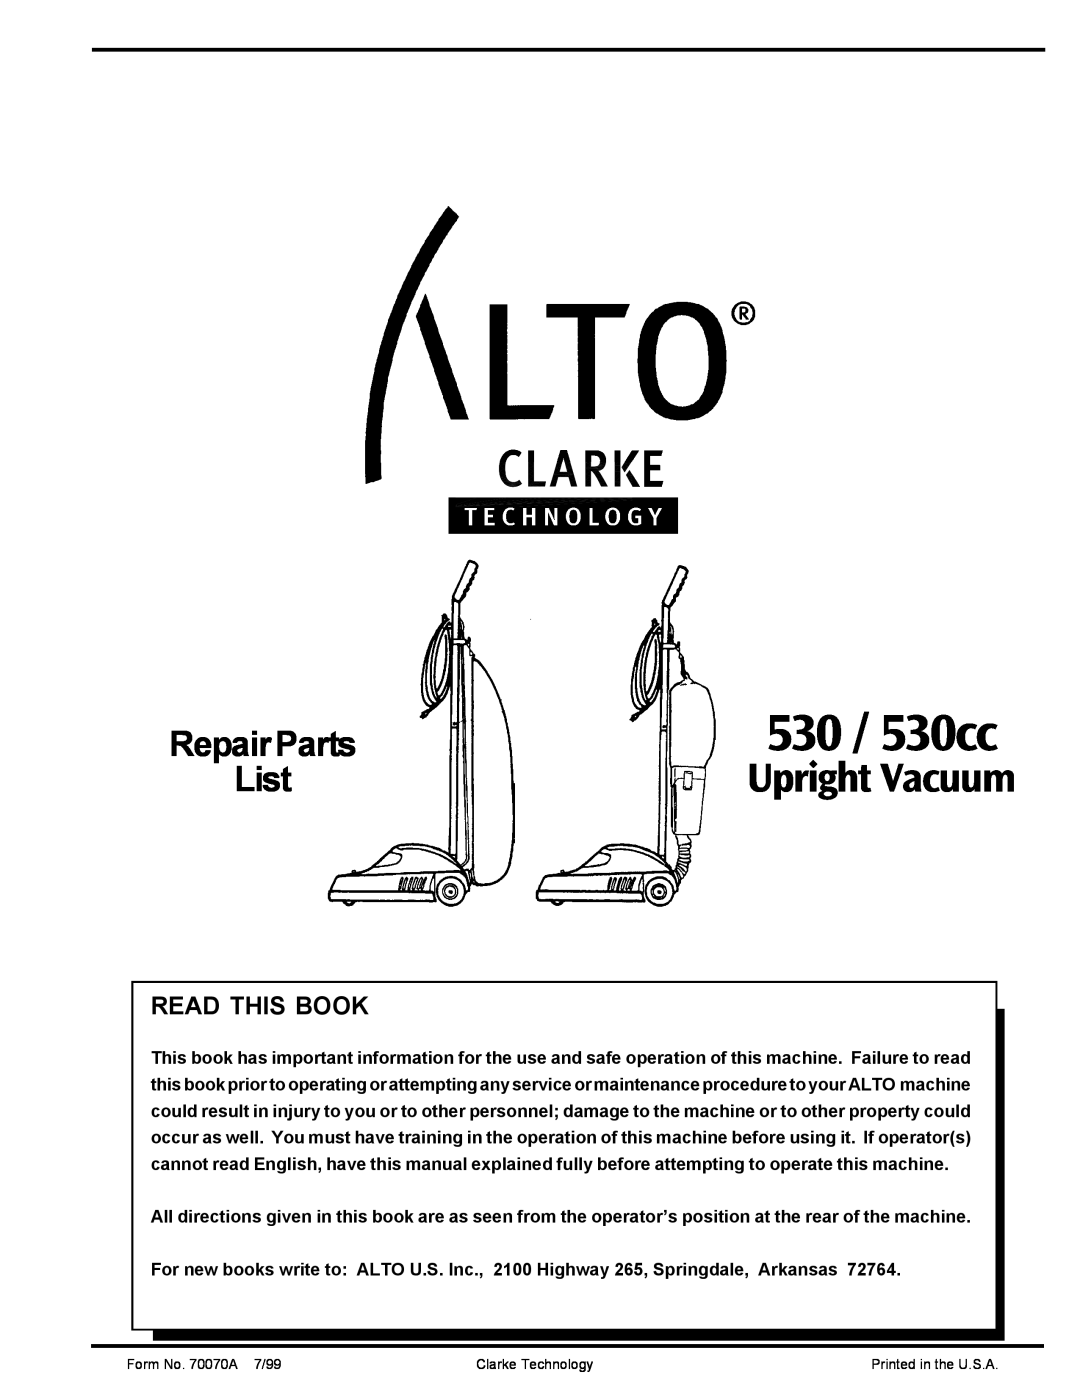 Nilfisk-ALTO manual 530 / 530cc, Upright Vacuum, RepairParts List, Read This Book 